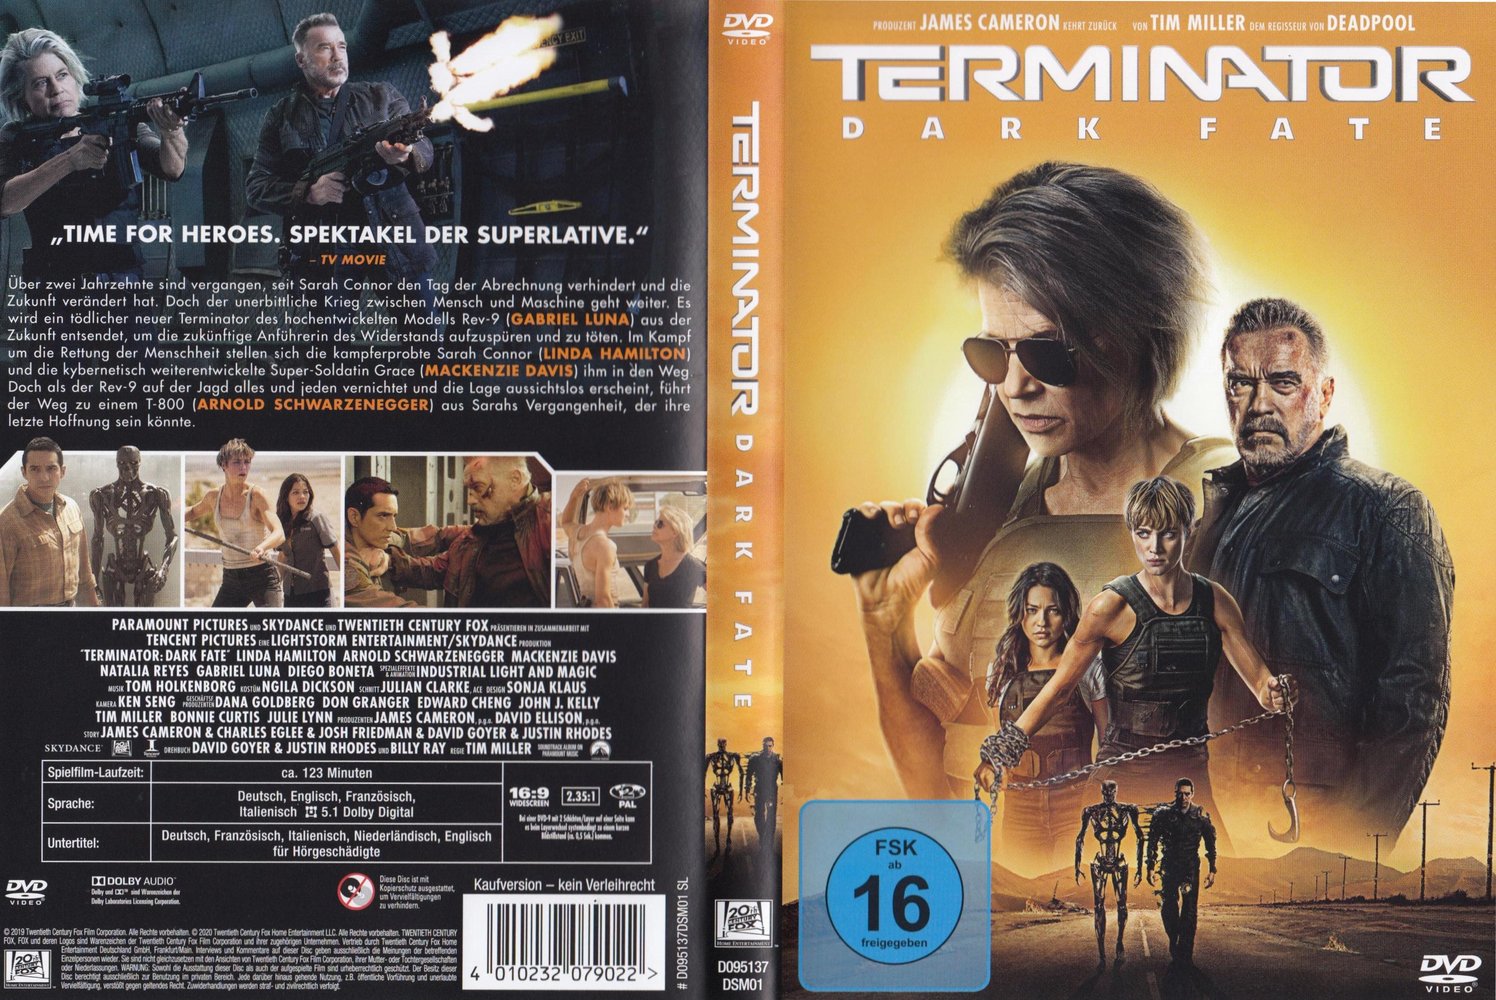 Terminator dark fate купить. Terminator Dark Fate. Терминатор (DVD). Терминатор DVD меню. Terminator DVD Cover.